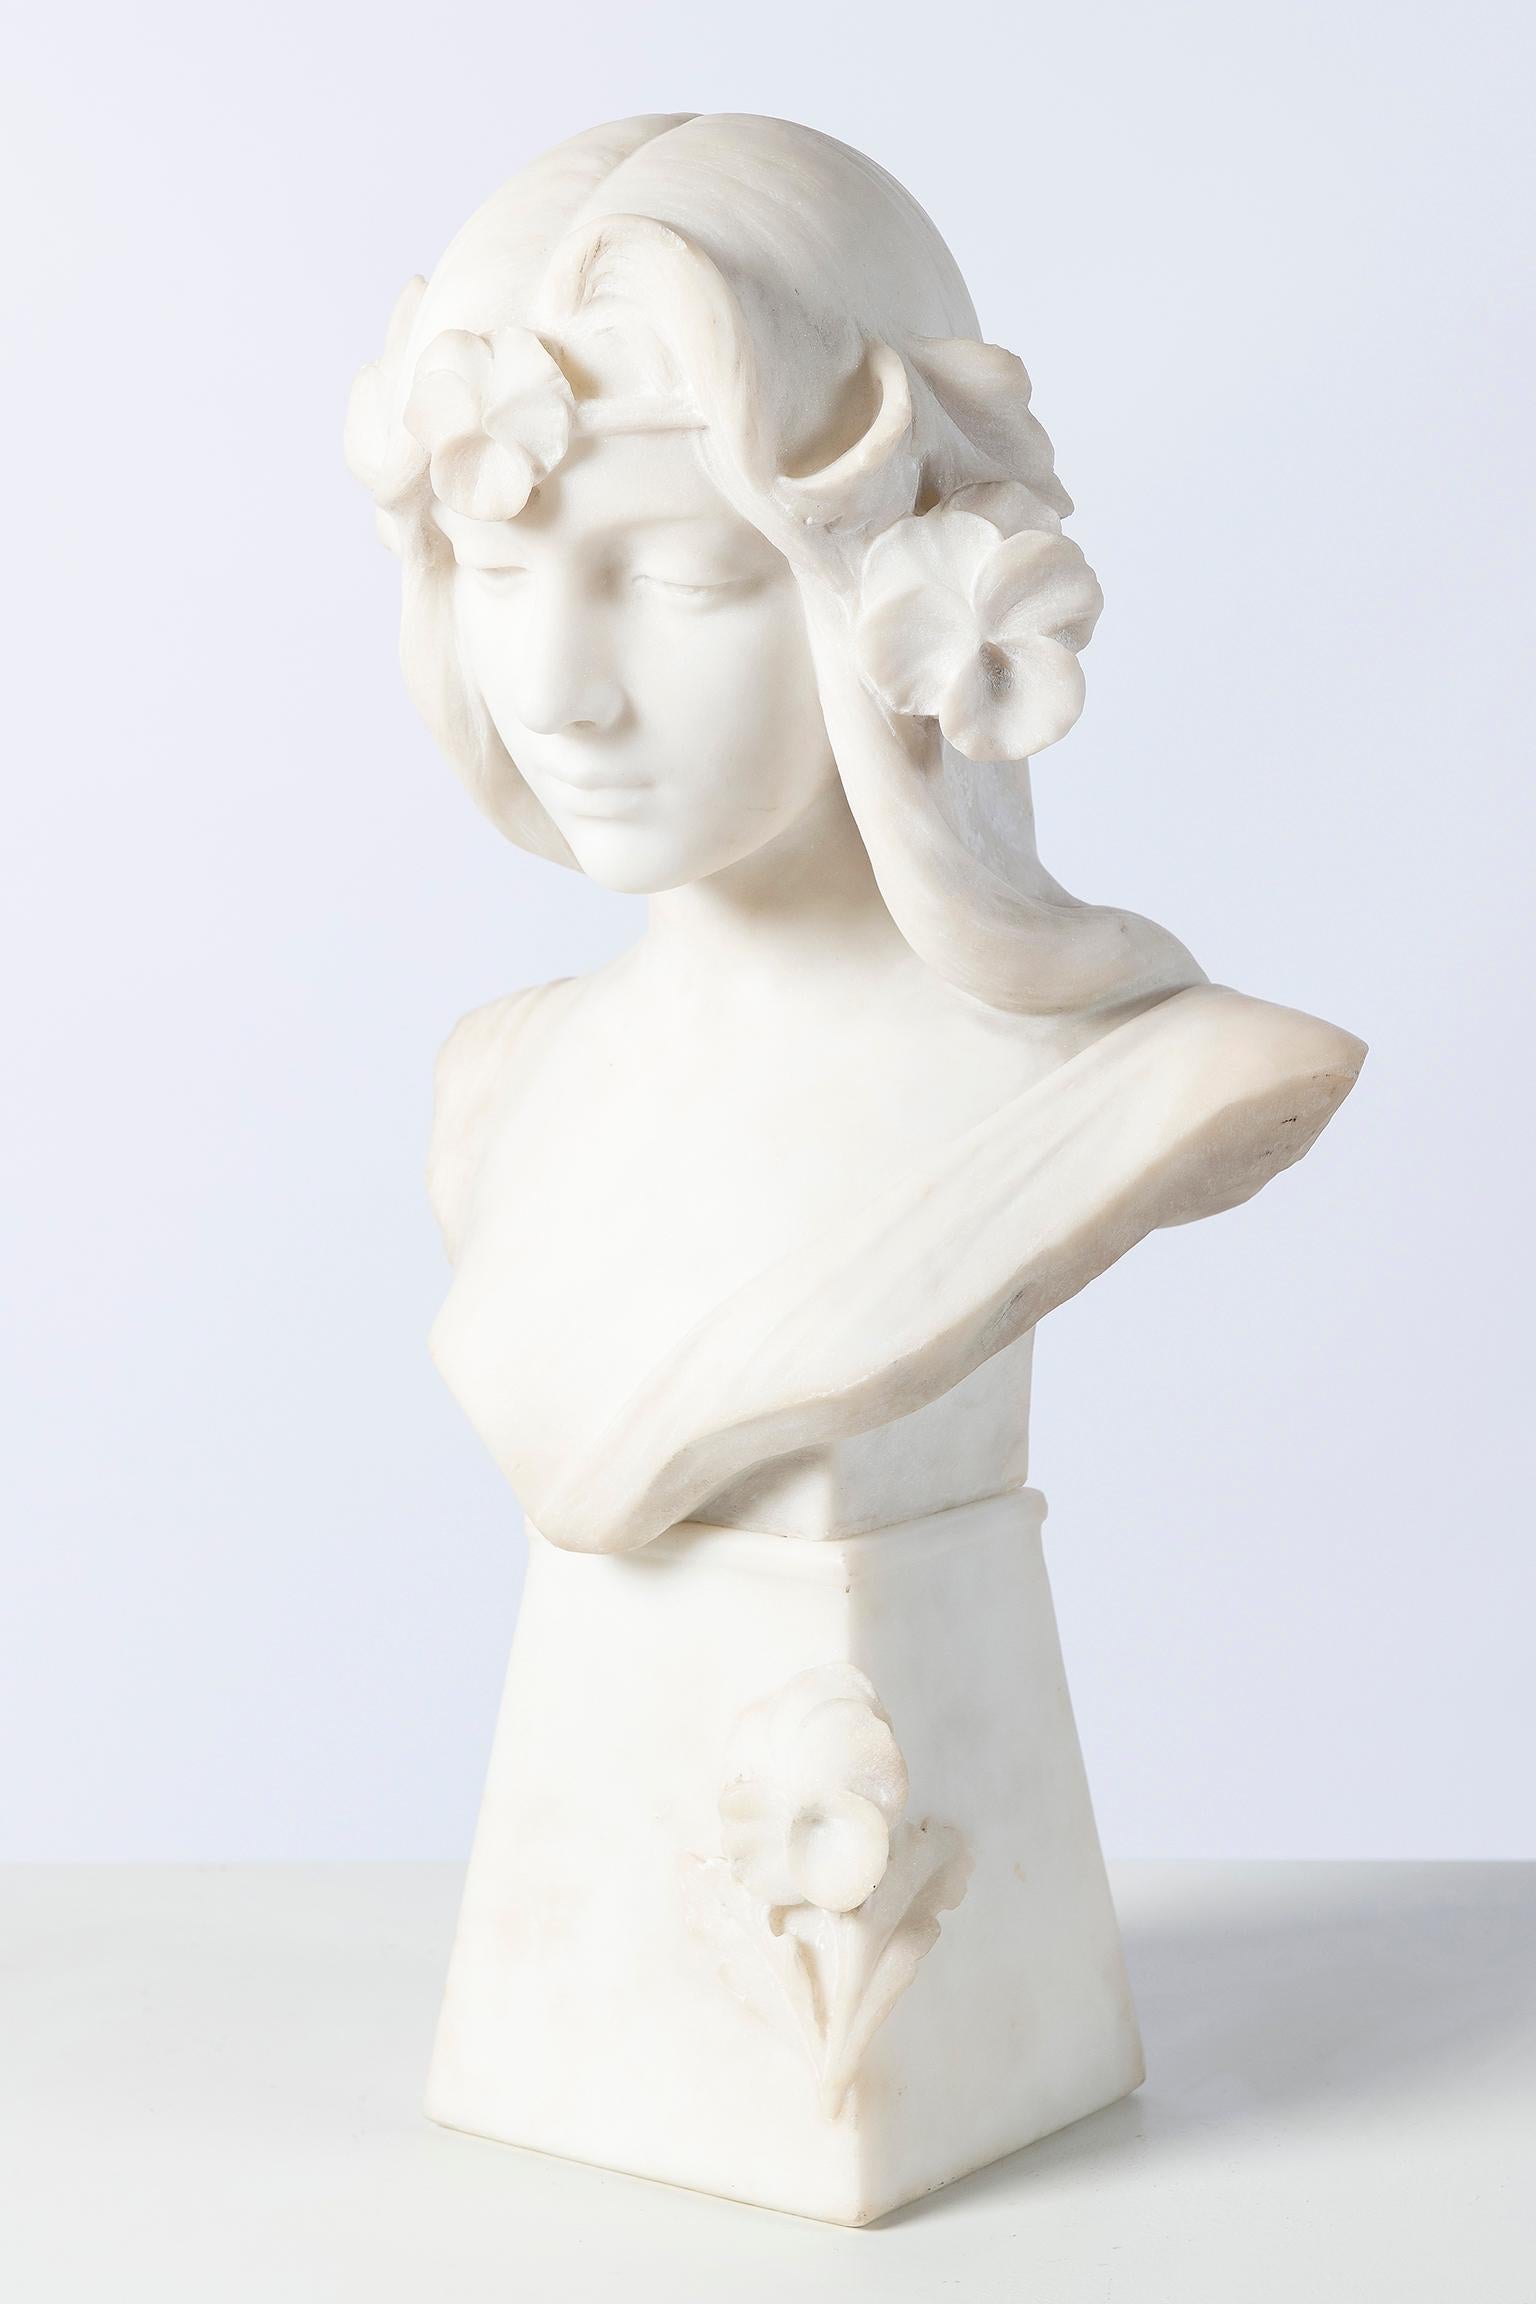 Carrara marble bust sculpture, signed C. Scheggi, Firenze, circa 1900.
(Cesare Scheggi 1833-1876).